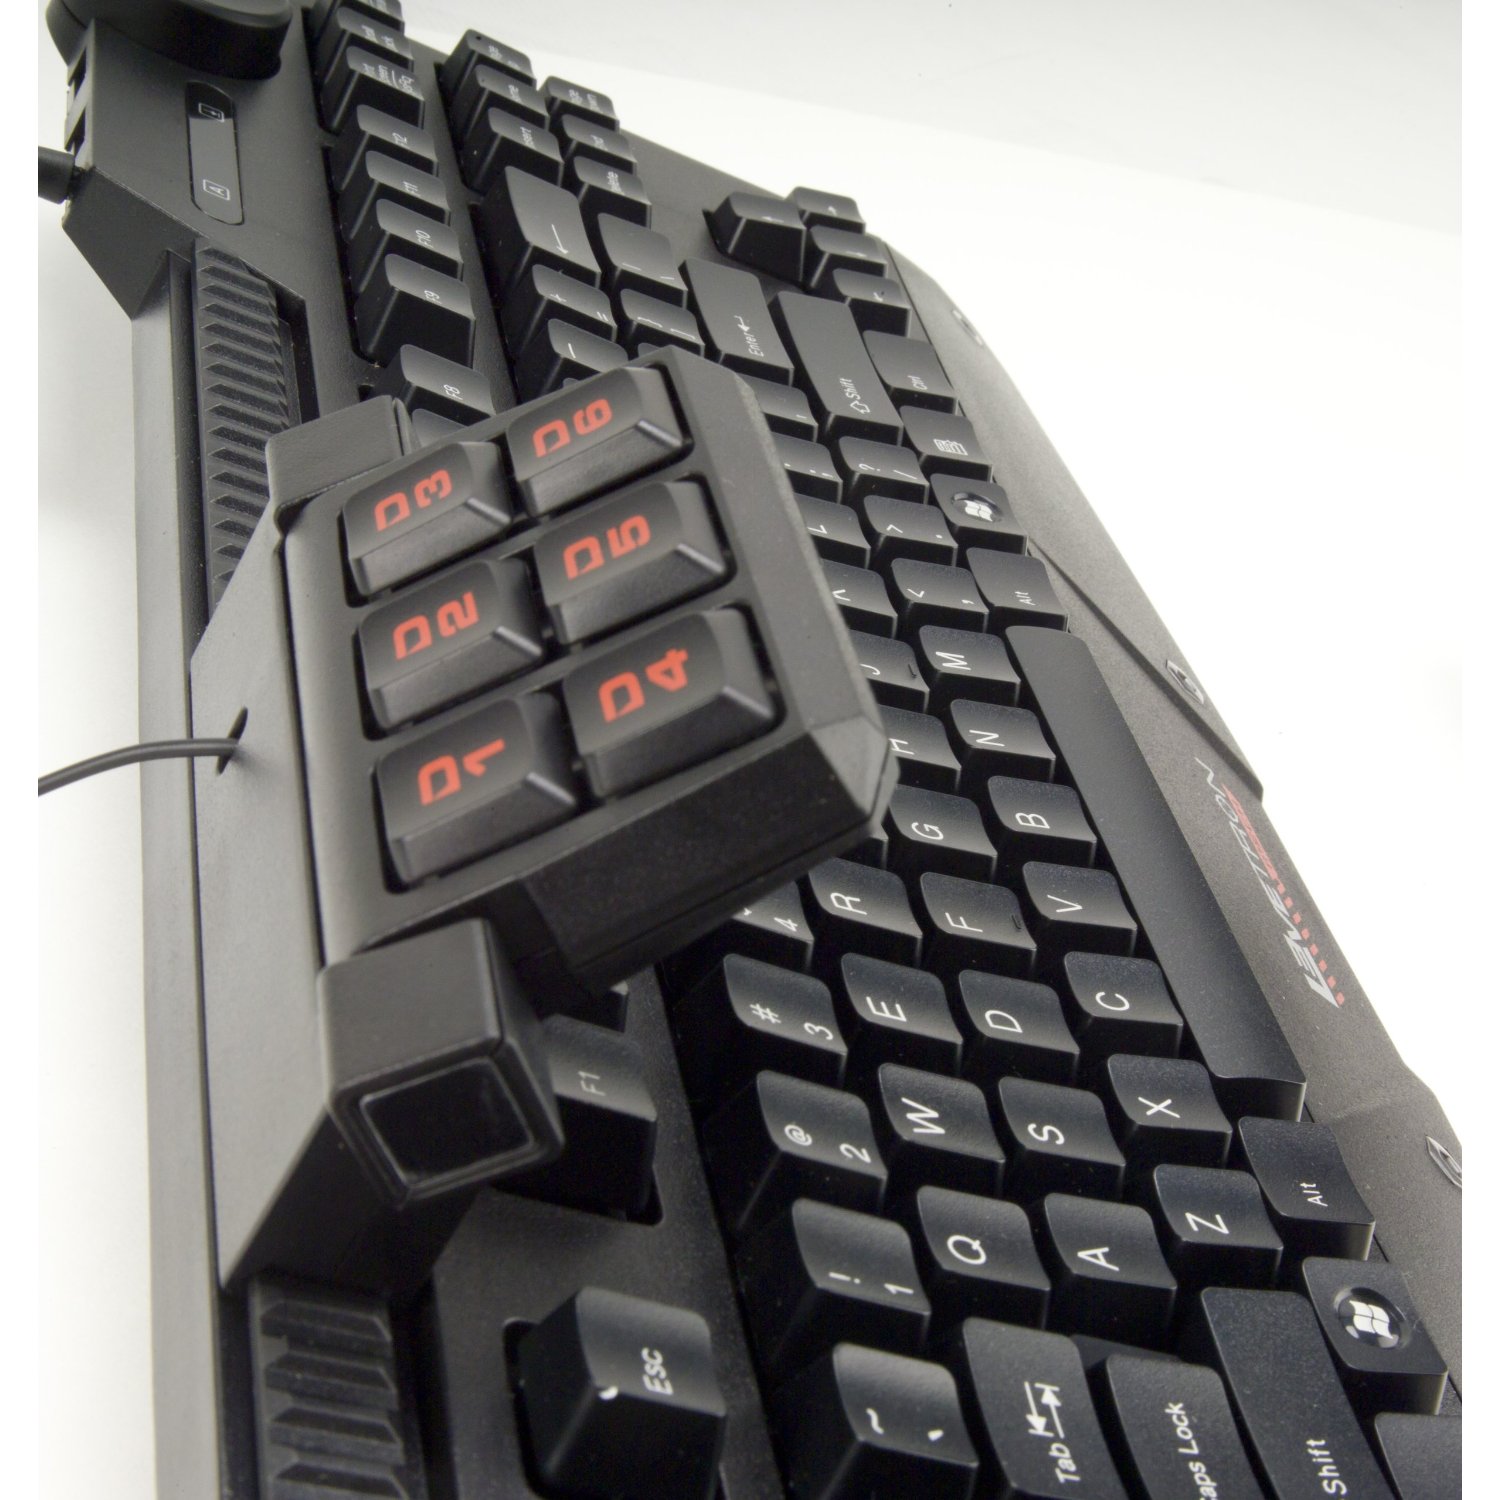 http://thetechjournal.com/wp-content/uploads/images/1208/1346151766-azio-levetron-mech5-mechanical-gaming-keyboard--6.jpg